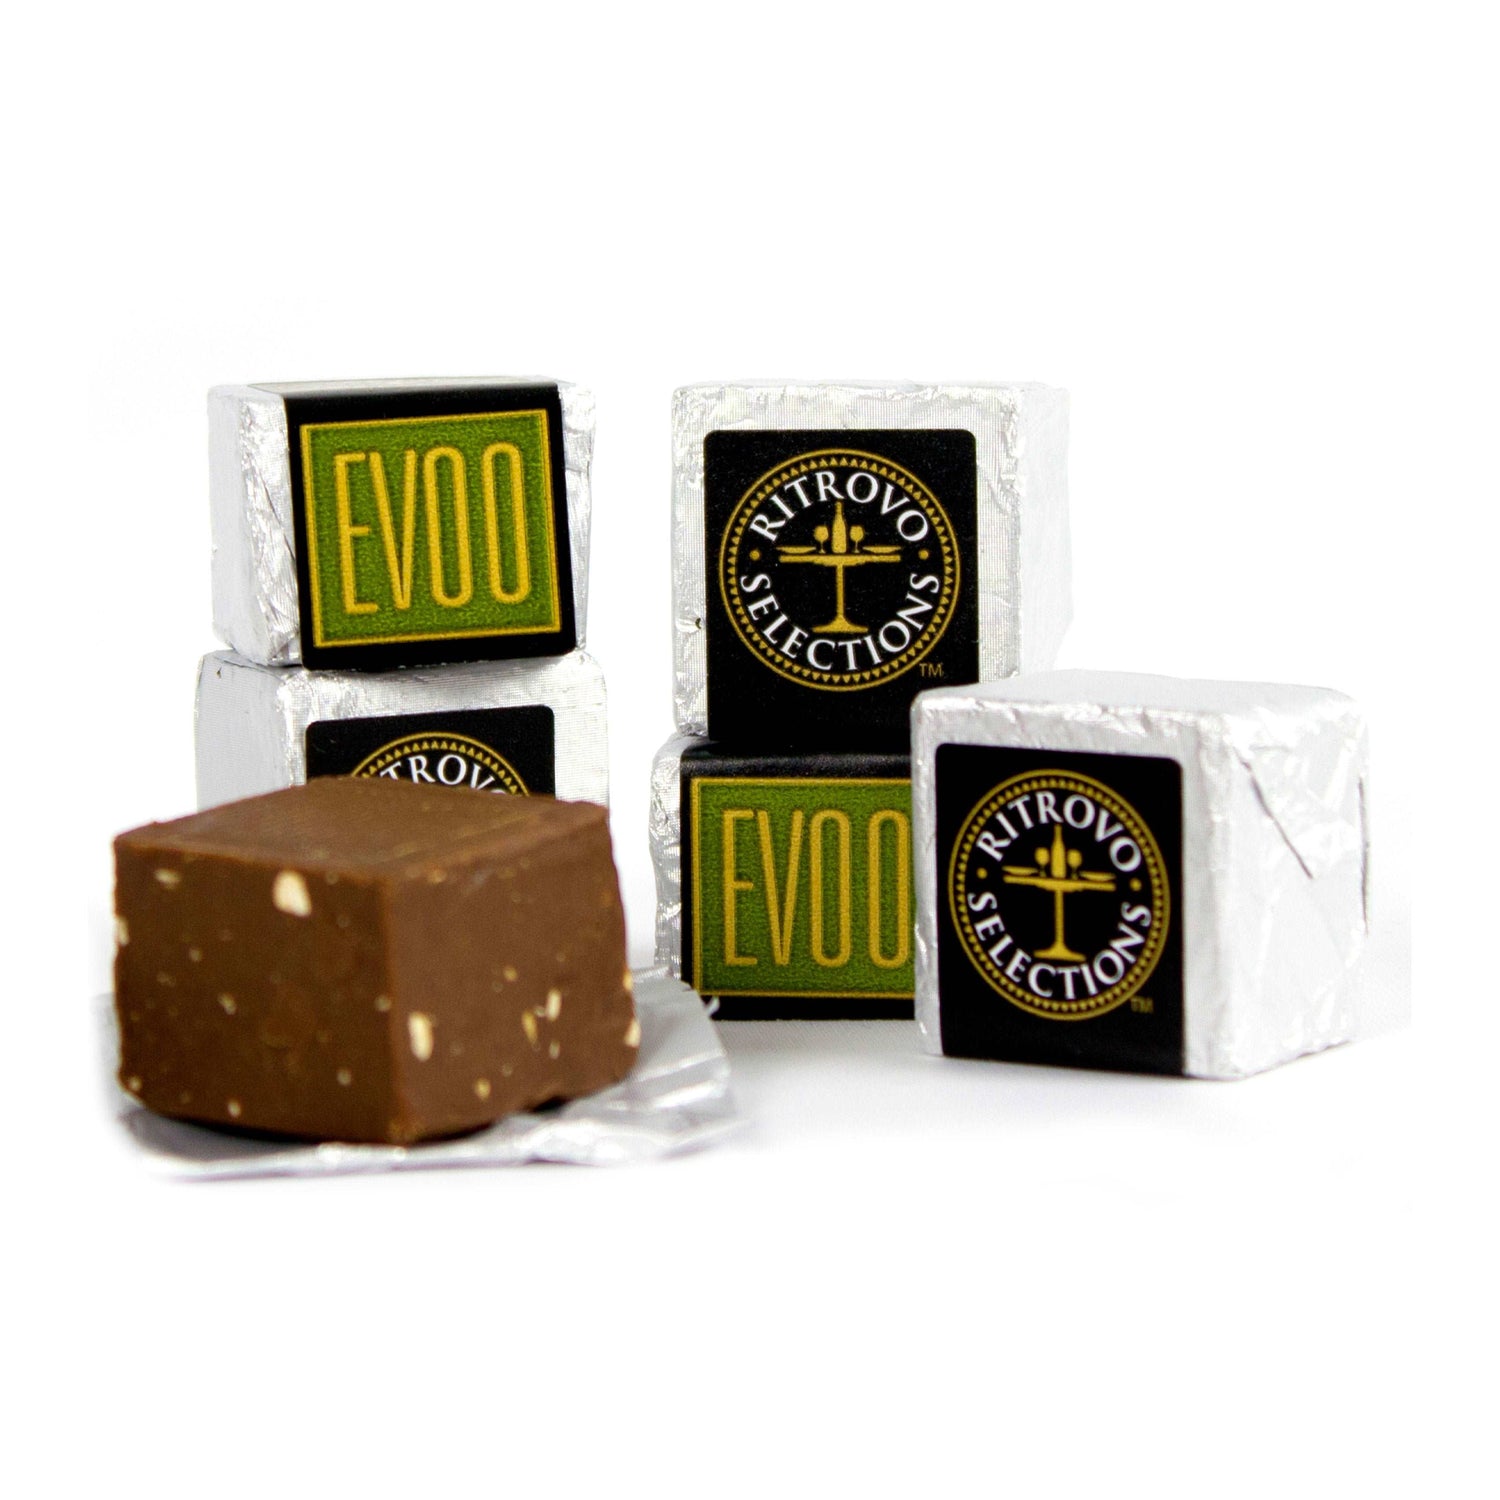 Guido Gobino Cremino Chocolates with EVOO & Sea Salt